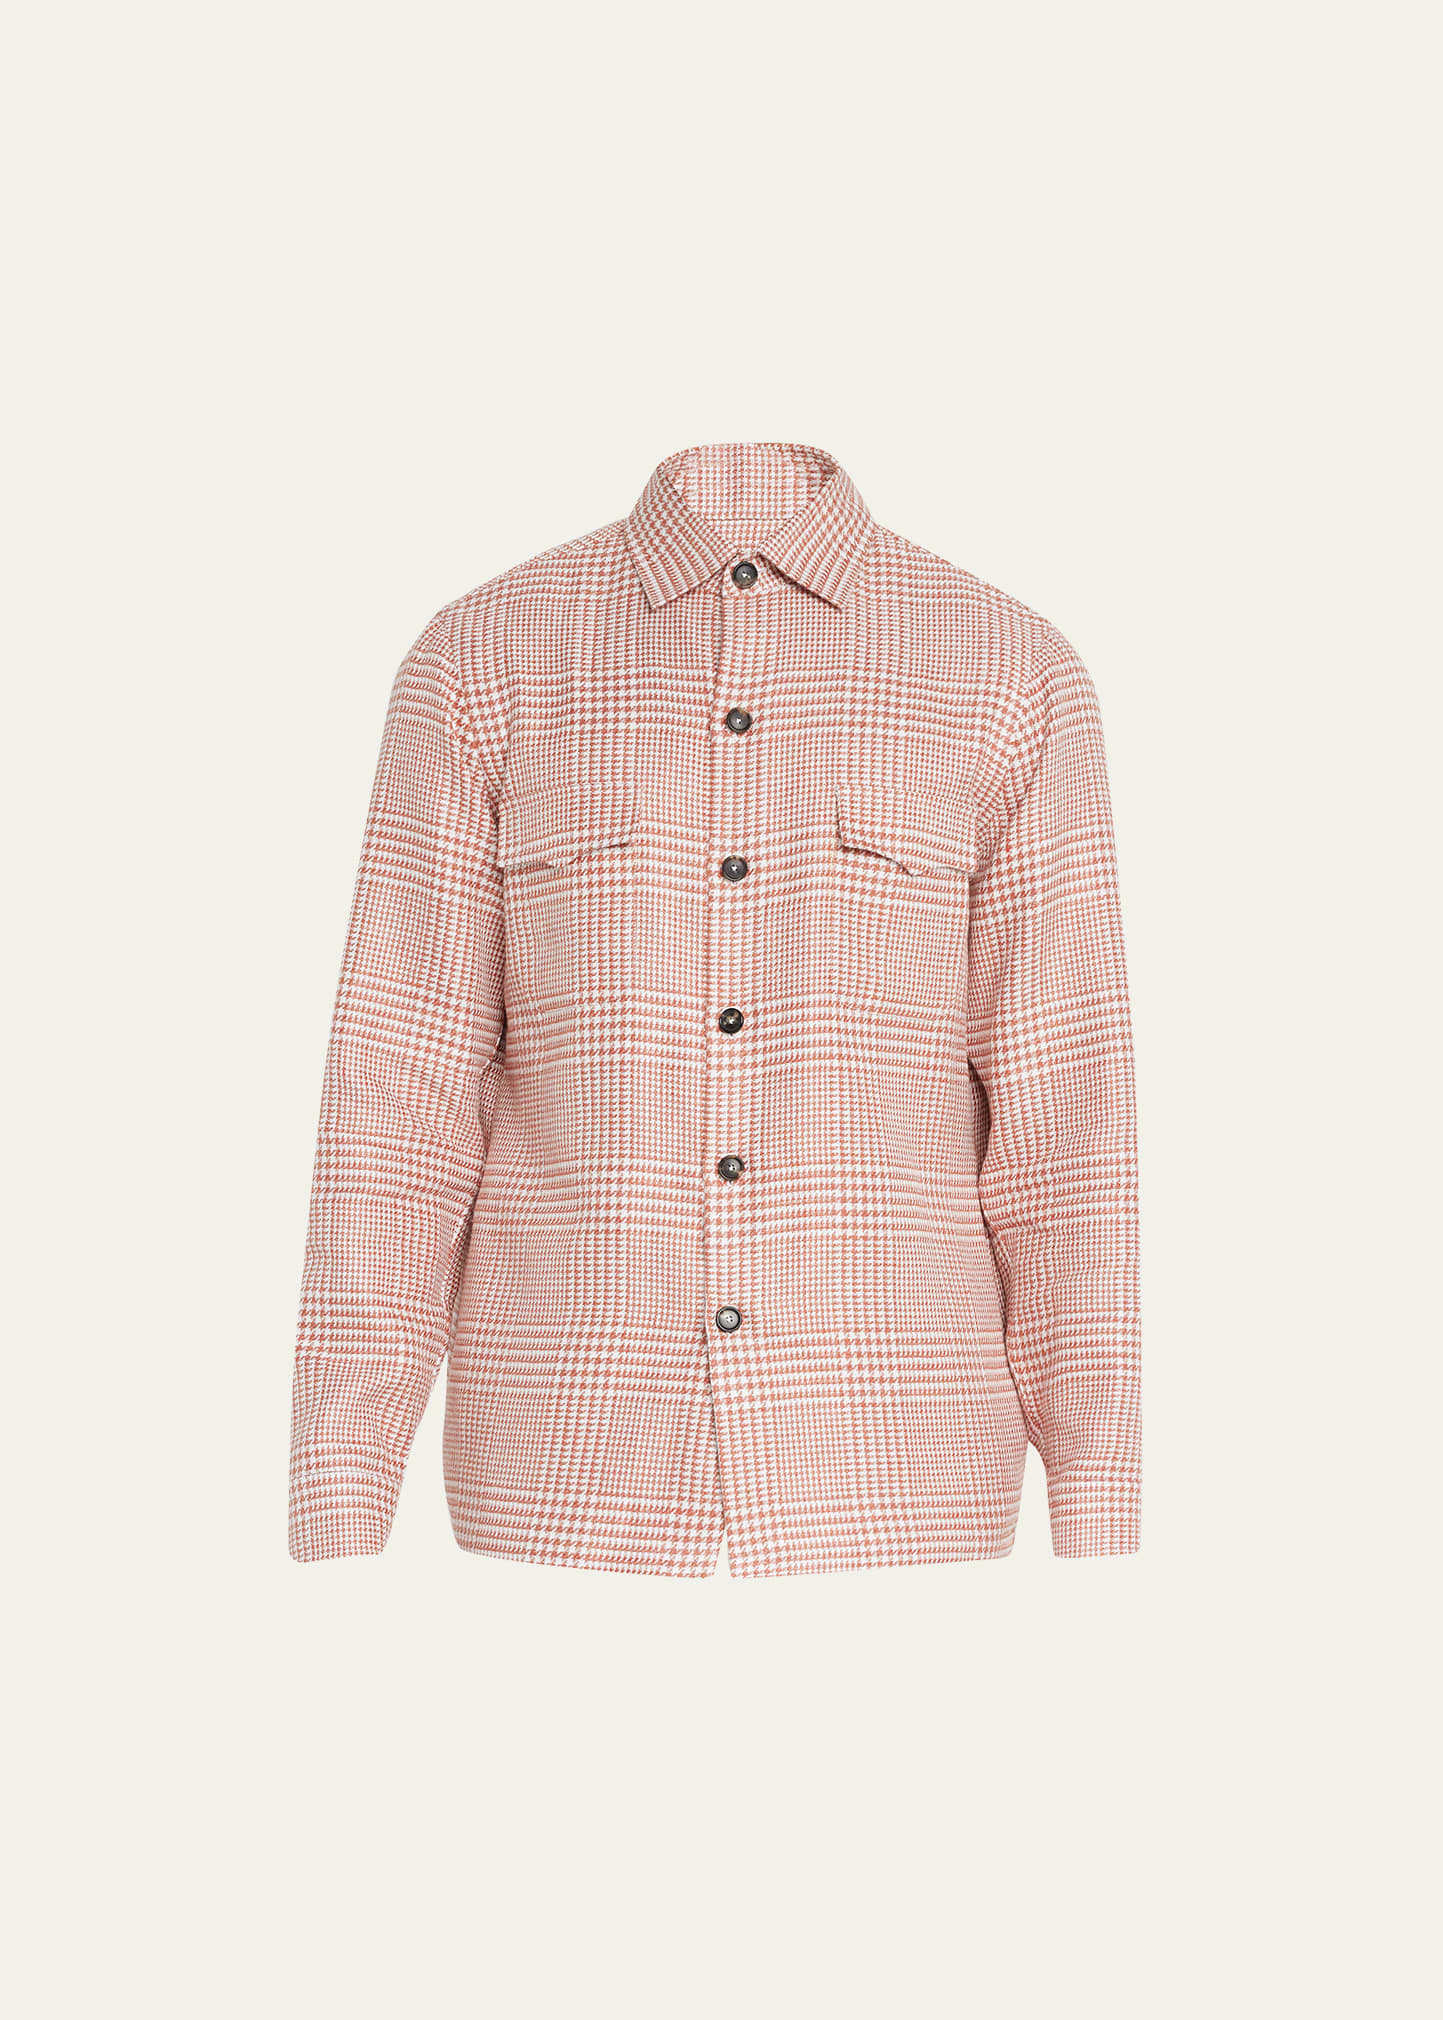 Cesare Attolini Men's Linen-Cotton Houndstooth Shirt Jacket